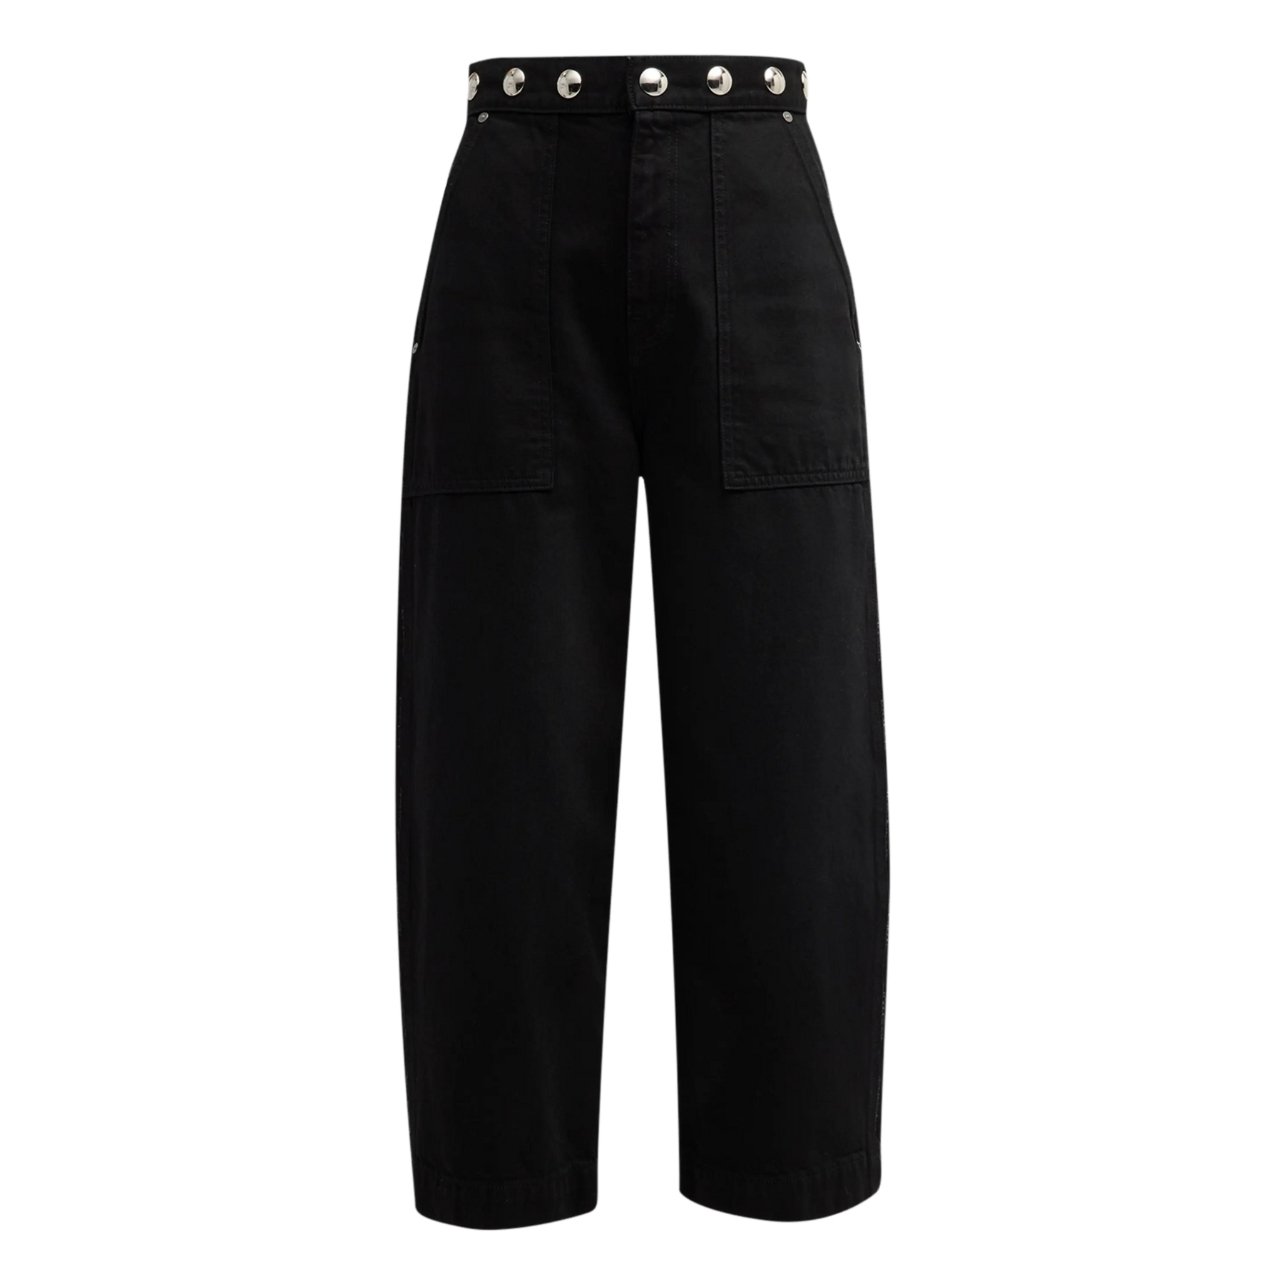 Neiman Marcus black Khaite denim culotte style jeans with silver studded waist